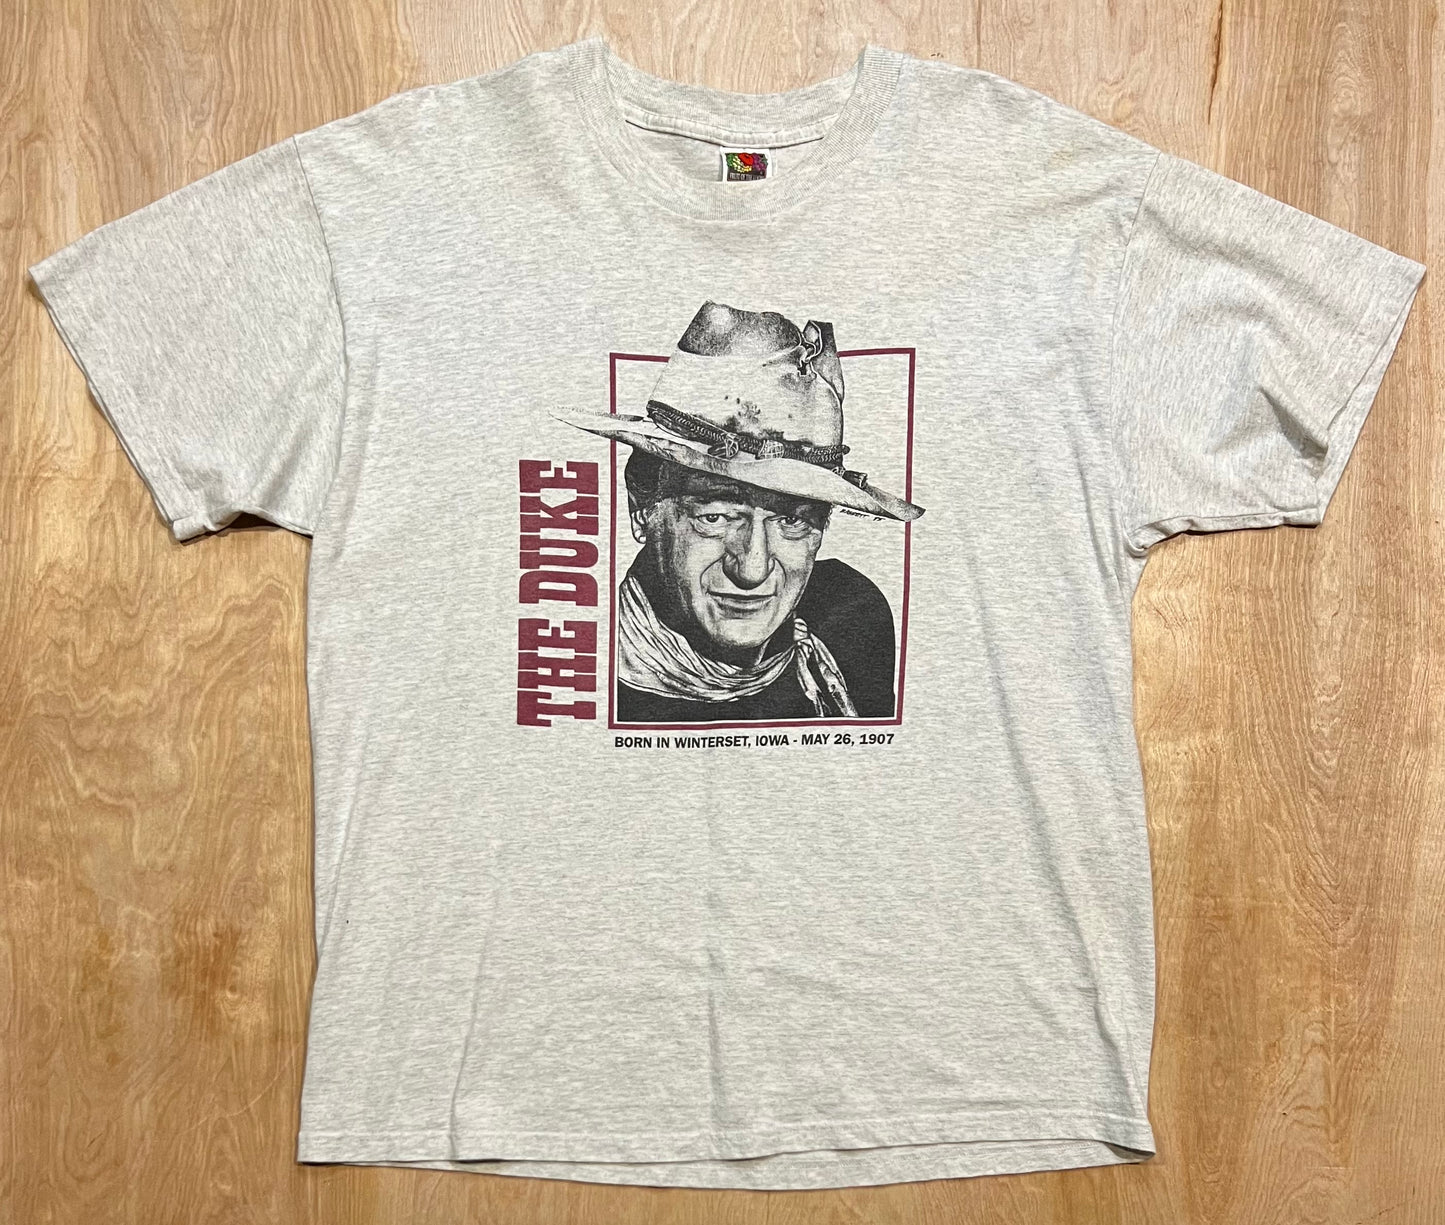 1995 John Wayne "The Duke" T-Shirt